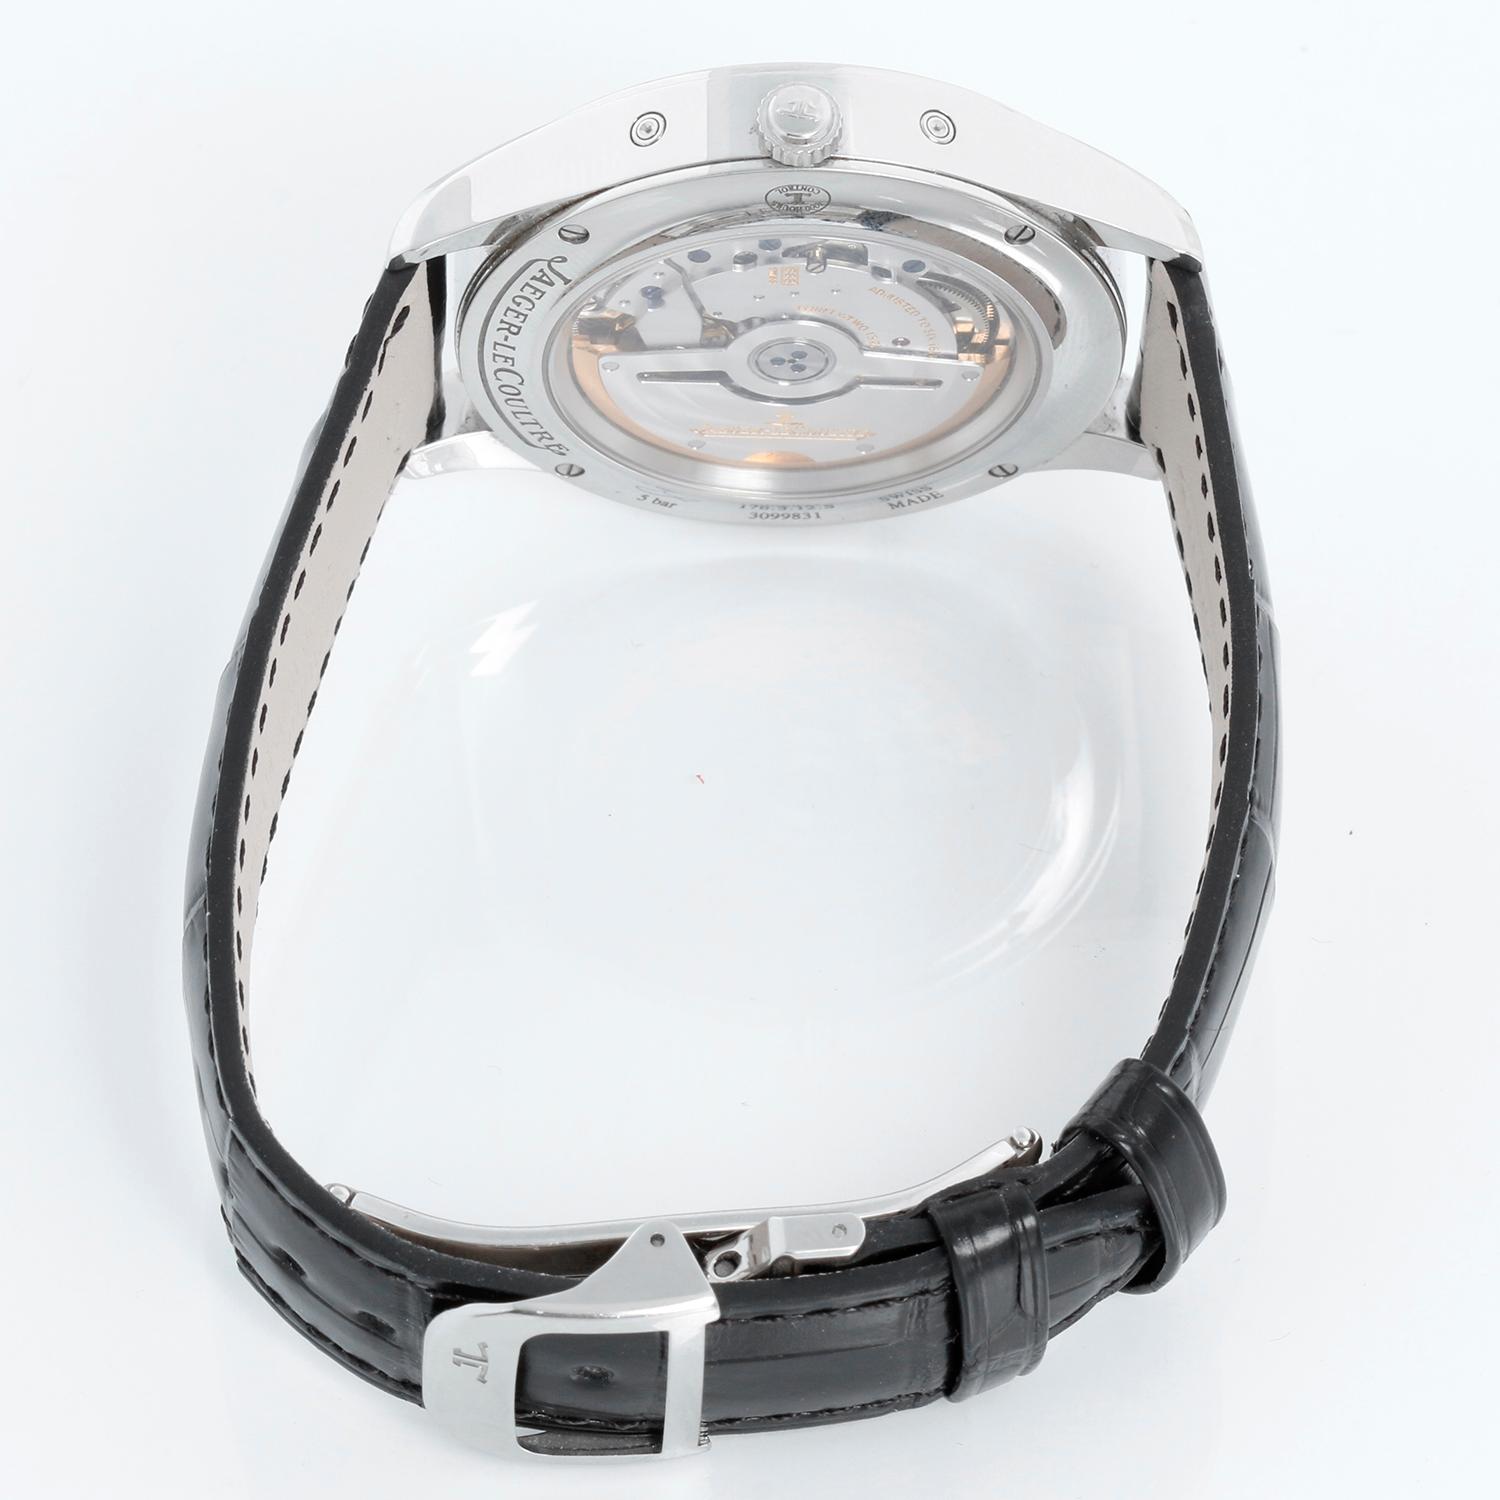 Jaeger-LeCoultre Master Calendar Men's Meteorite Stainless Steel Watch Q1558421  2